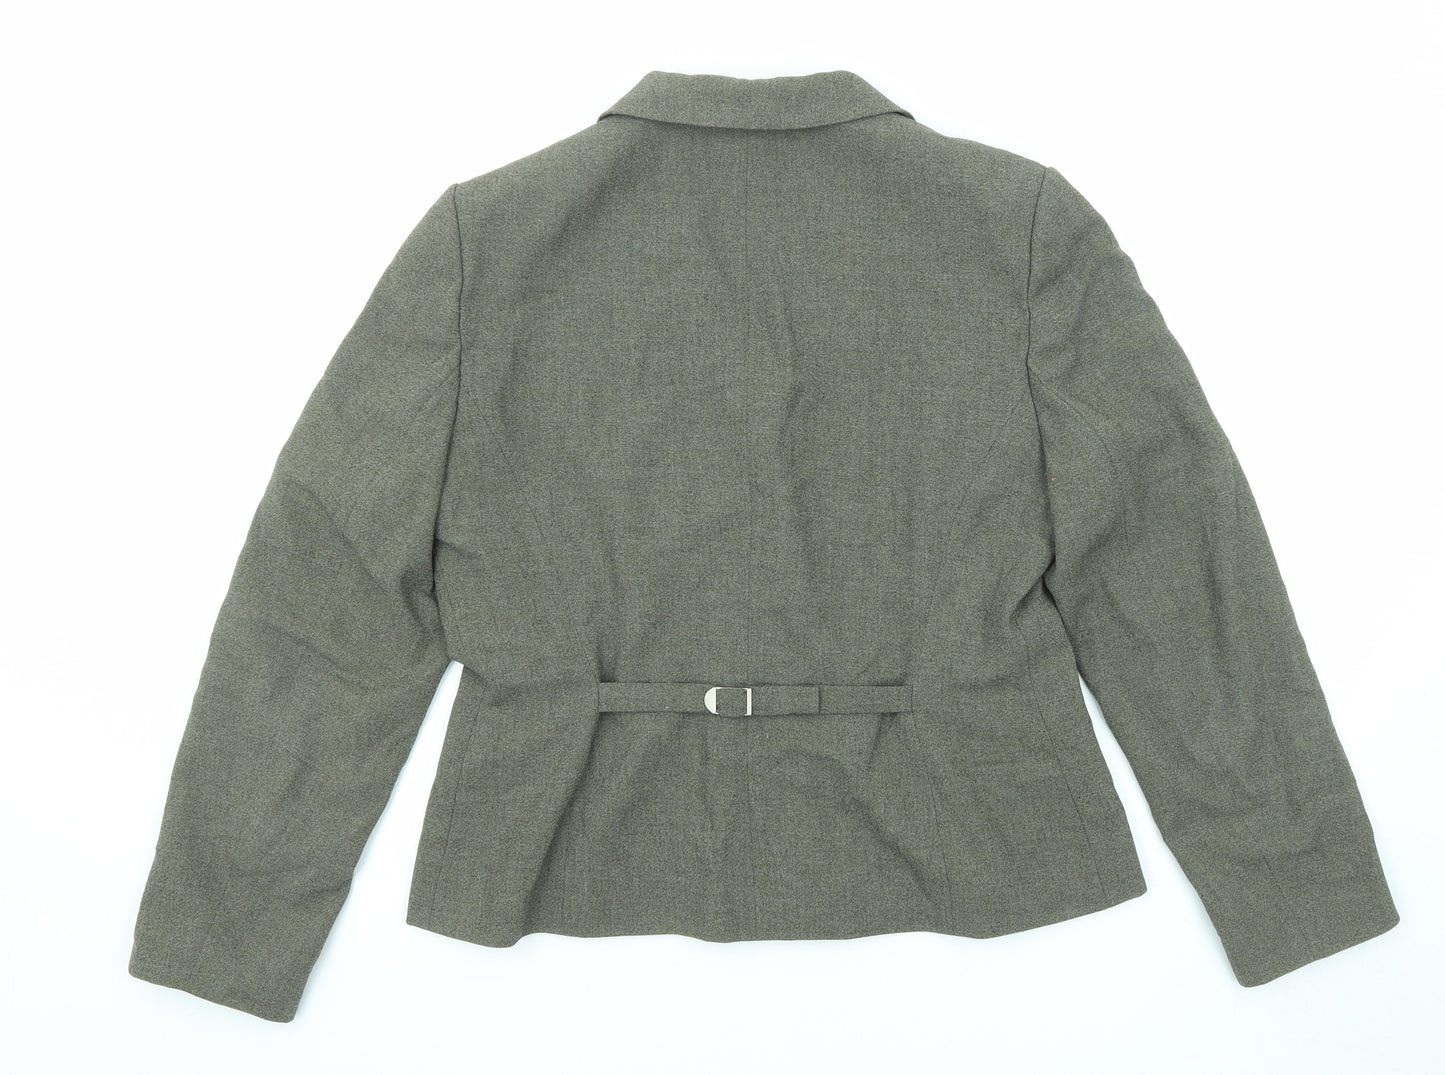 Wallis Womens Green Jacket Blazer Size 16 Button